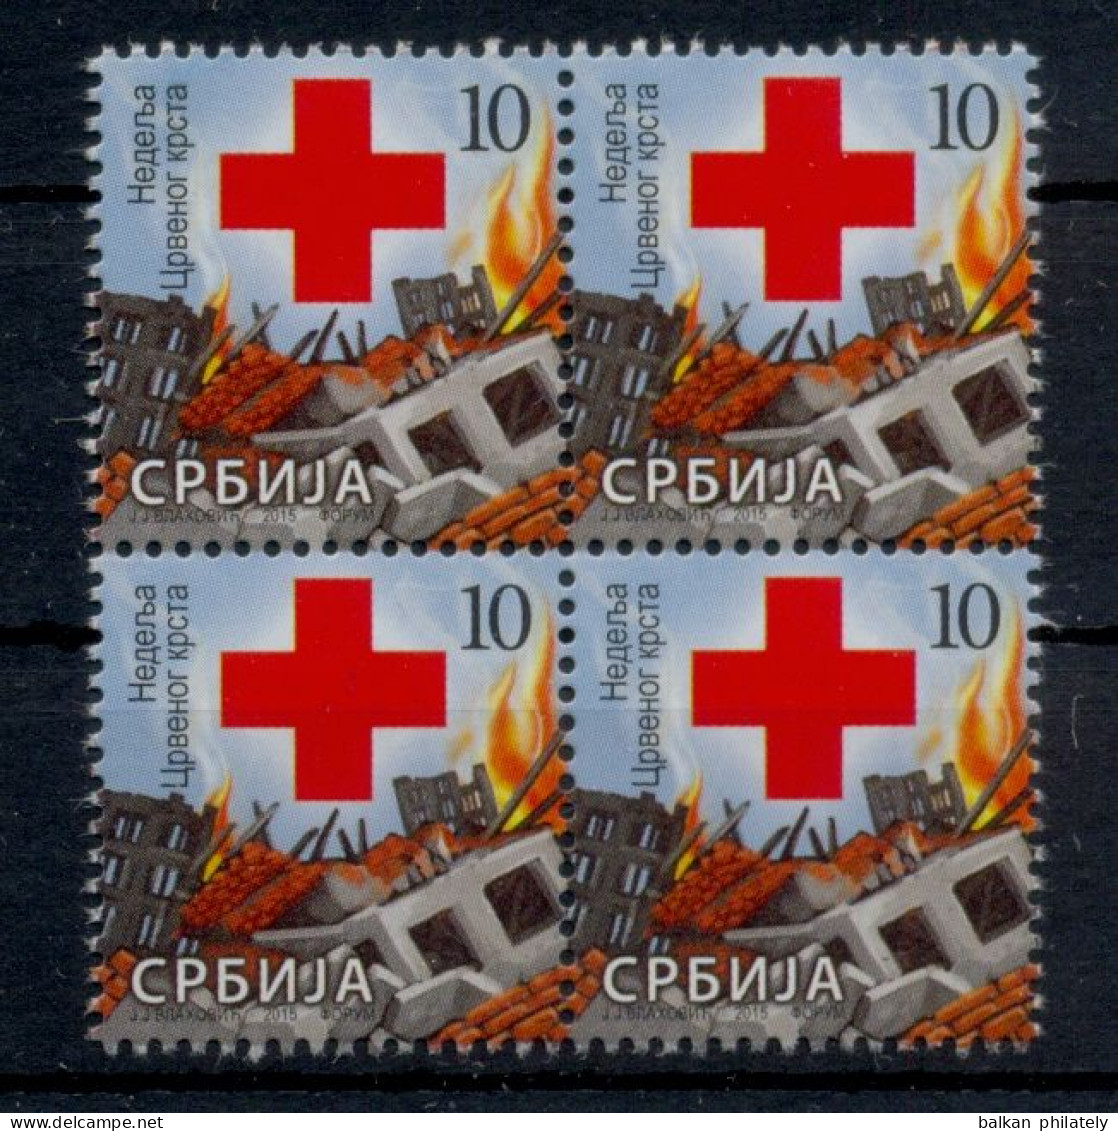 Serbia 2015 Red Cross Week Croix Rouge Rotes Kreuz Cruz Roja Croce Rossa Tax Charity Surcharge MNH - Serbia